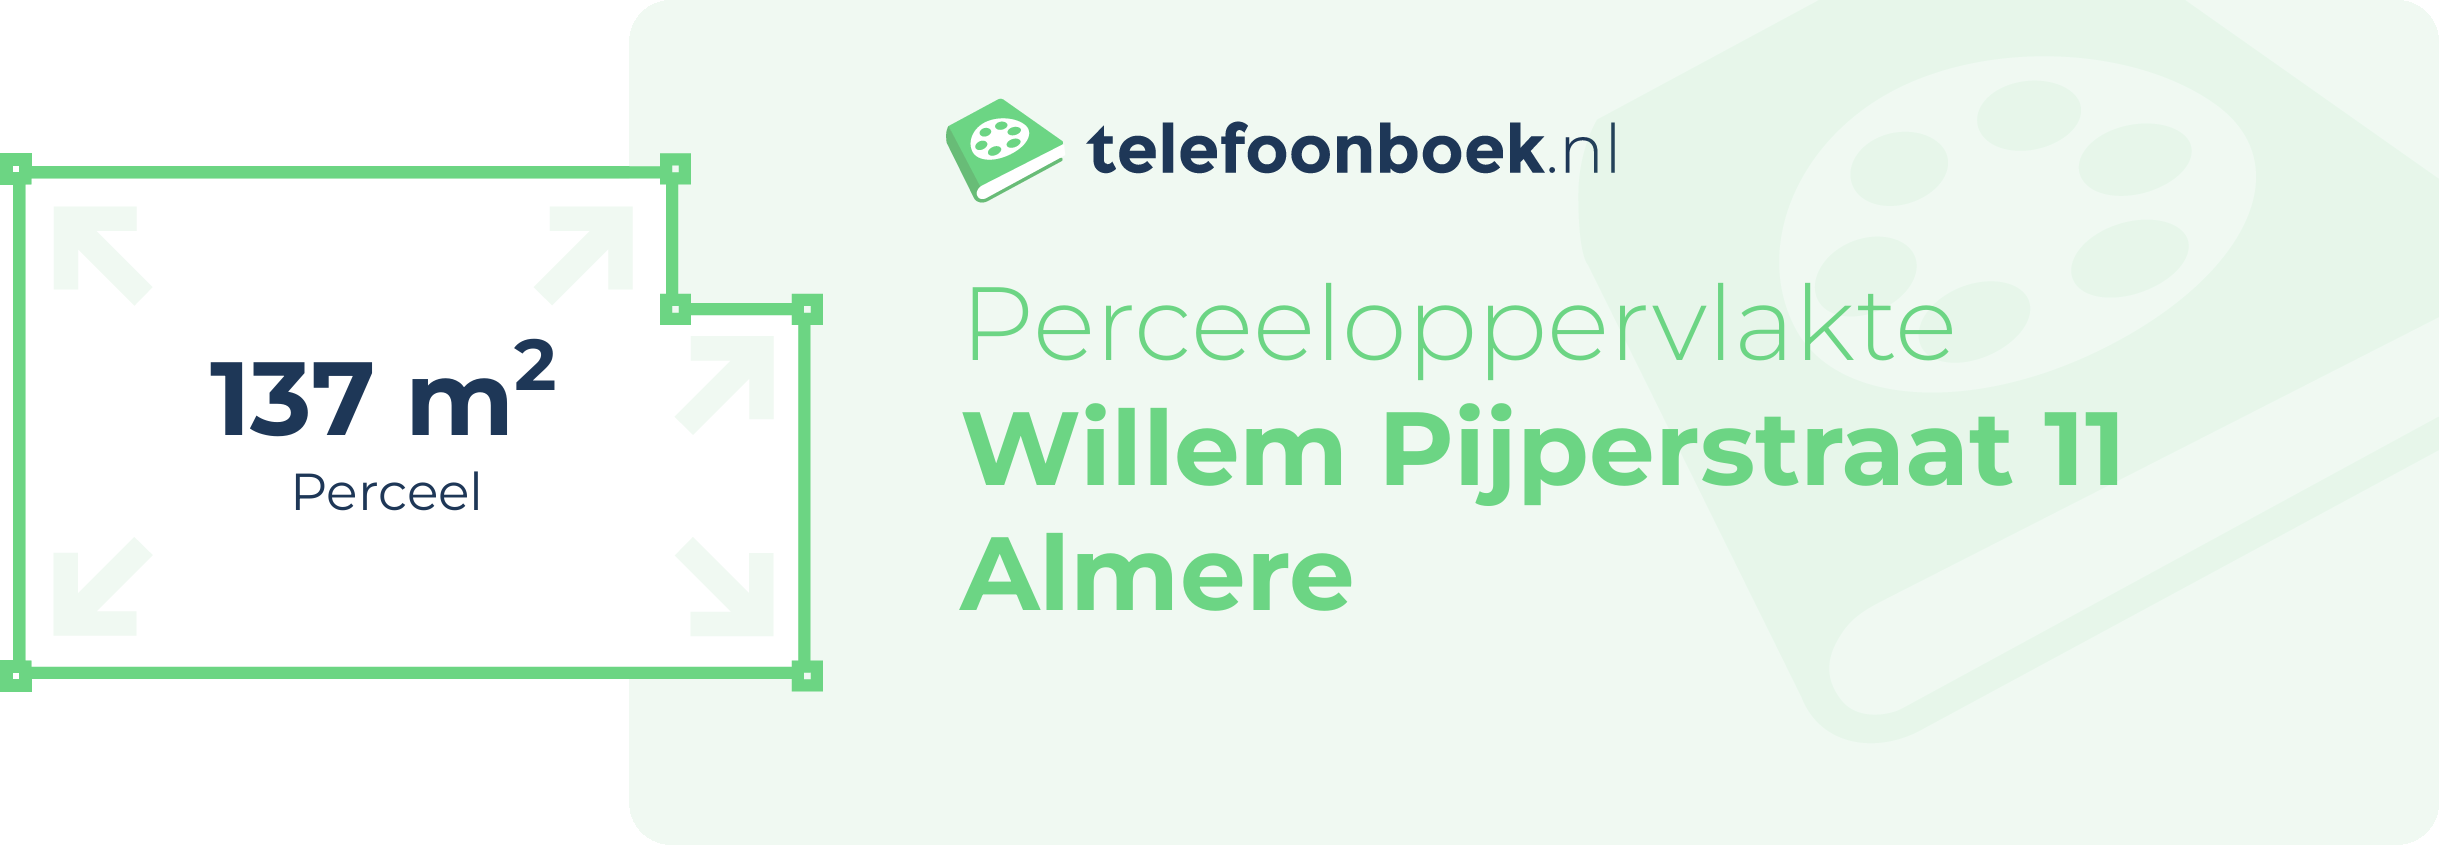 Perceeloppervlakte Willem Pijperstraat 11 Almere